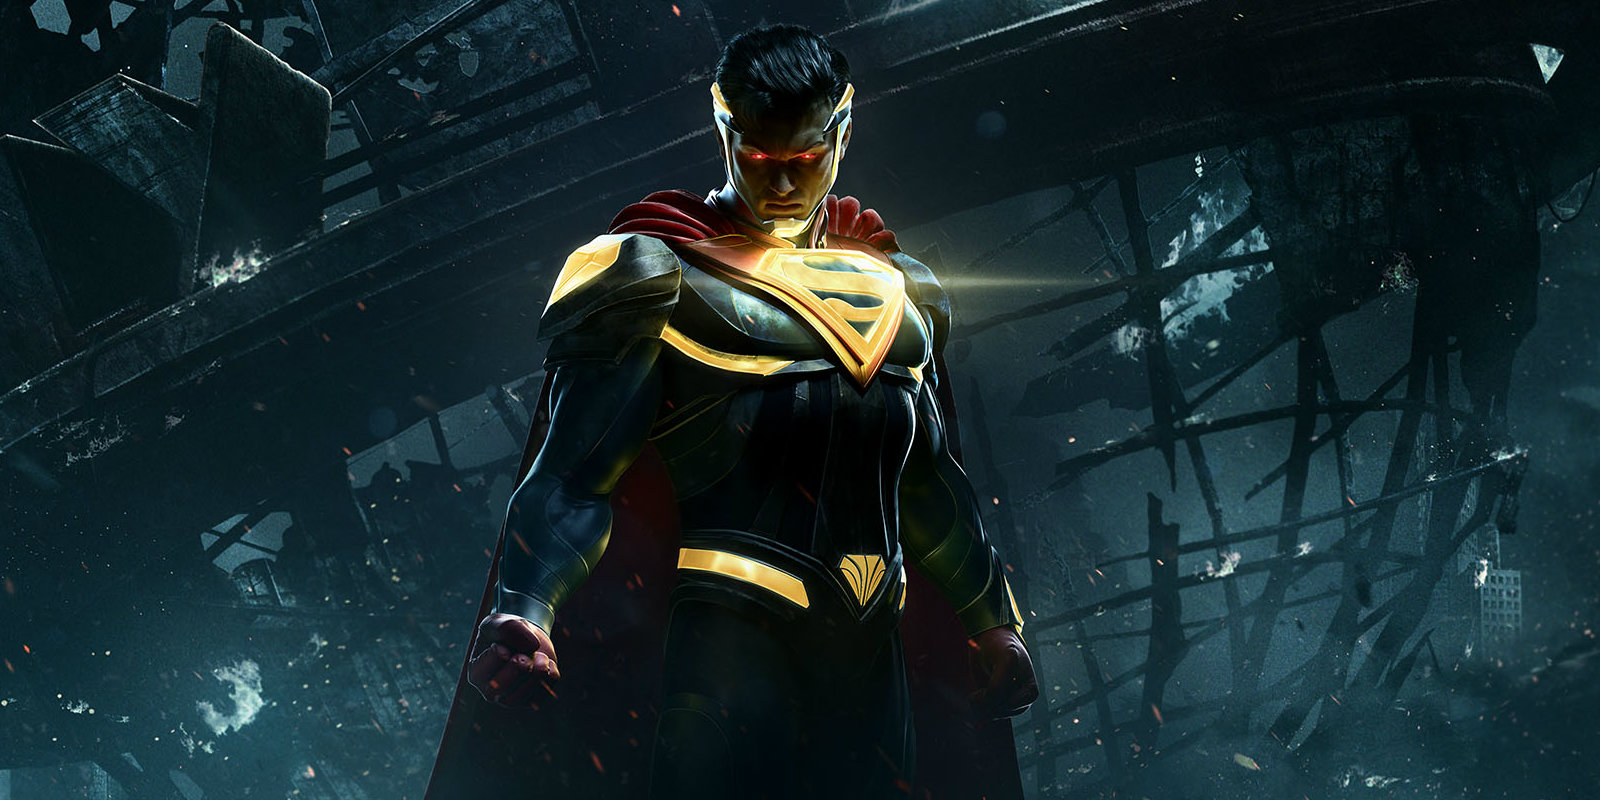 Le prochain film animé DC sera une adaptation du jeu vidéo Injustice